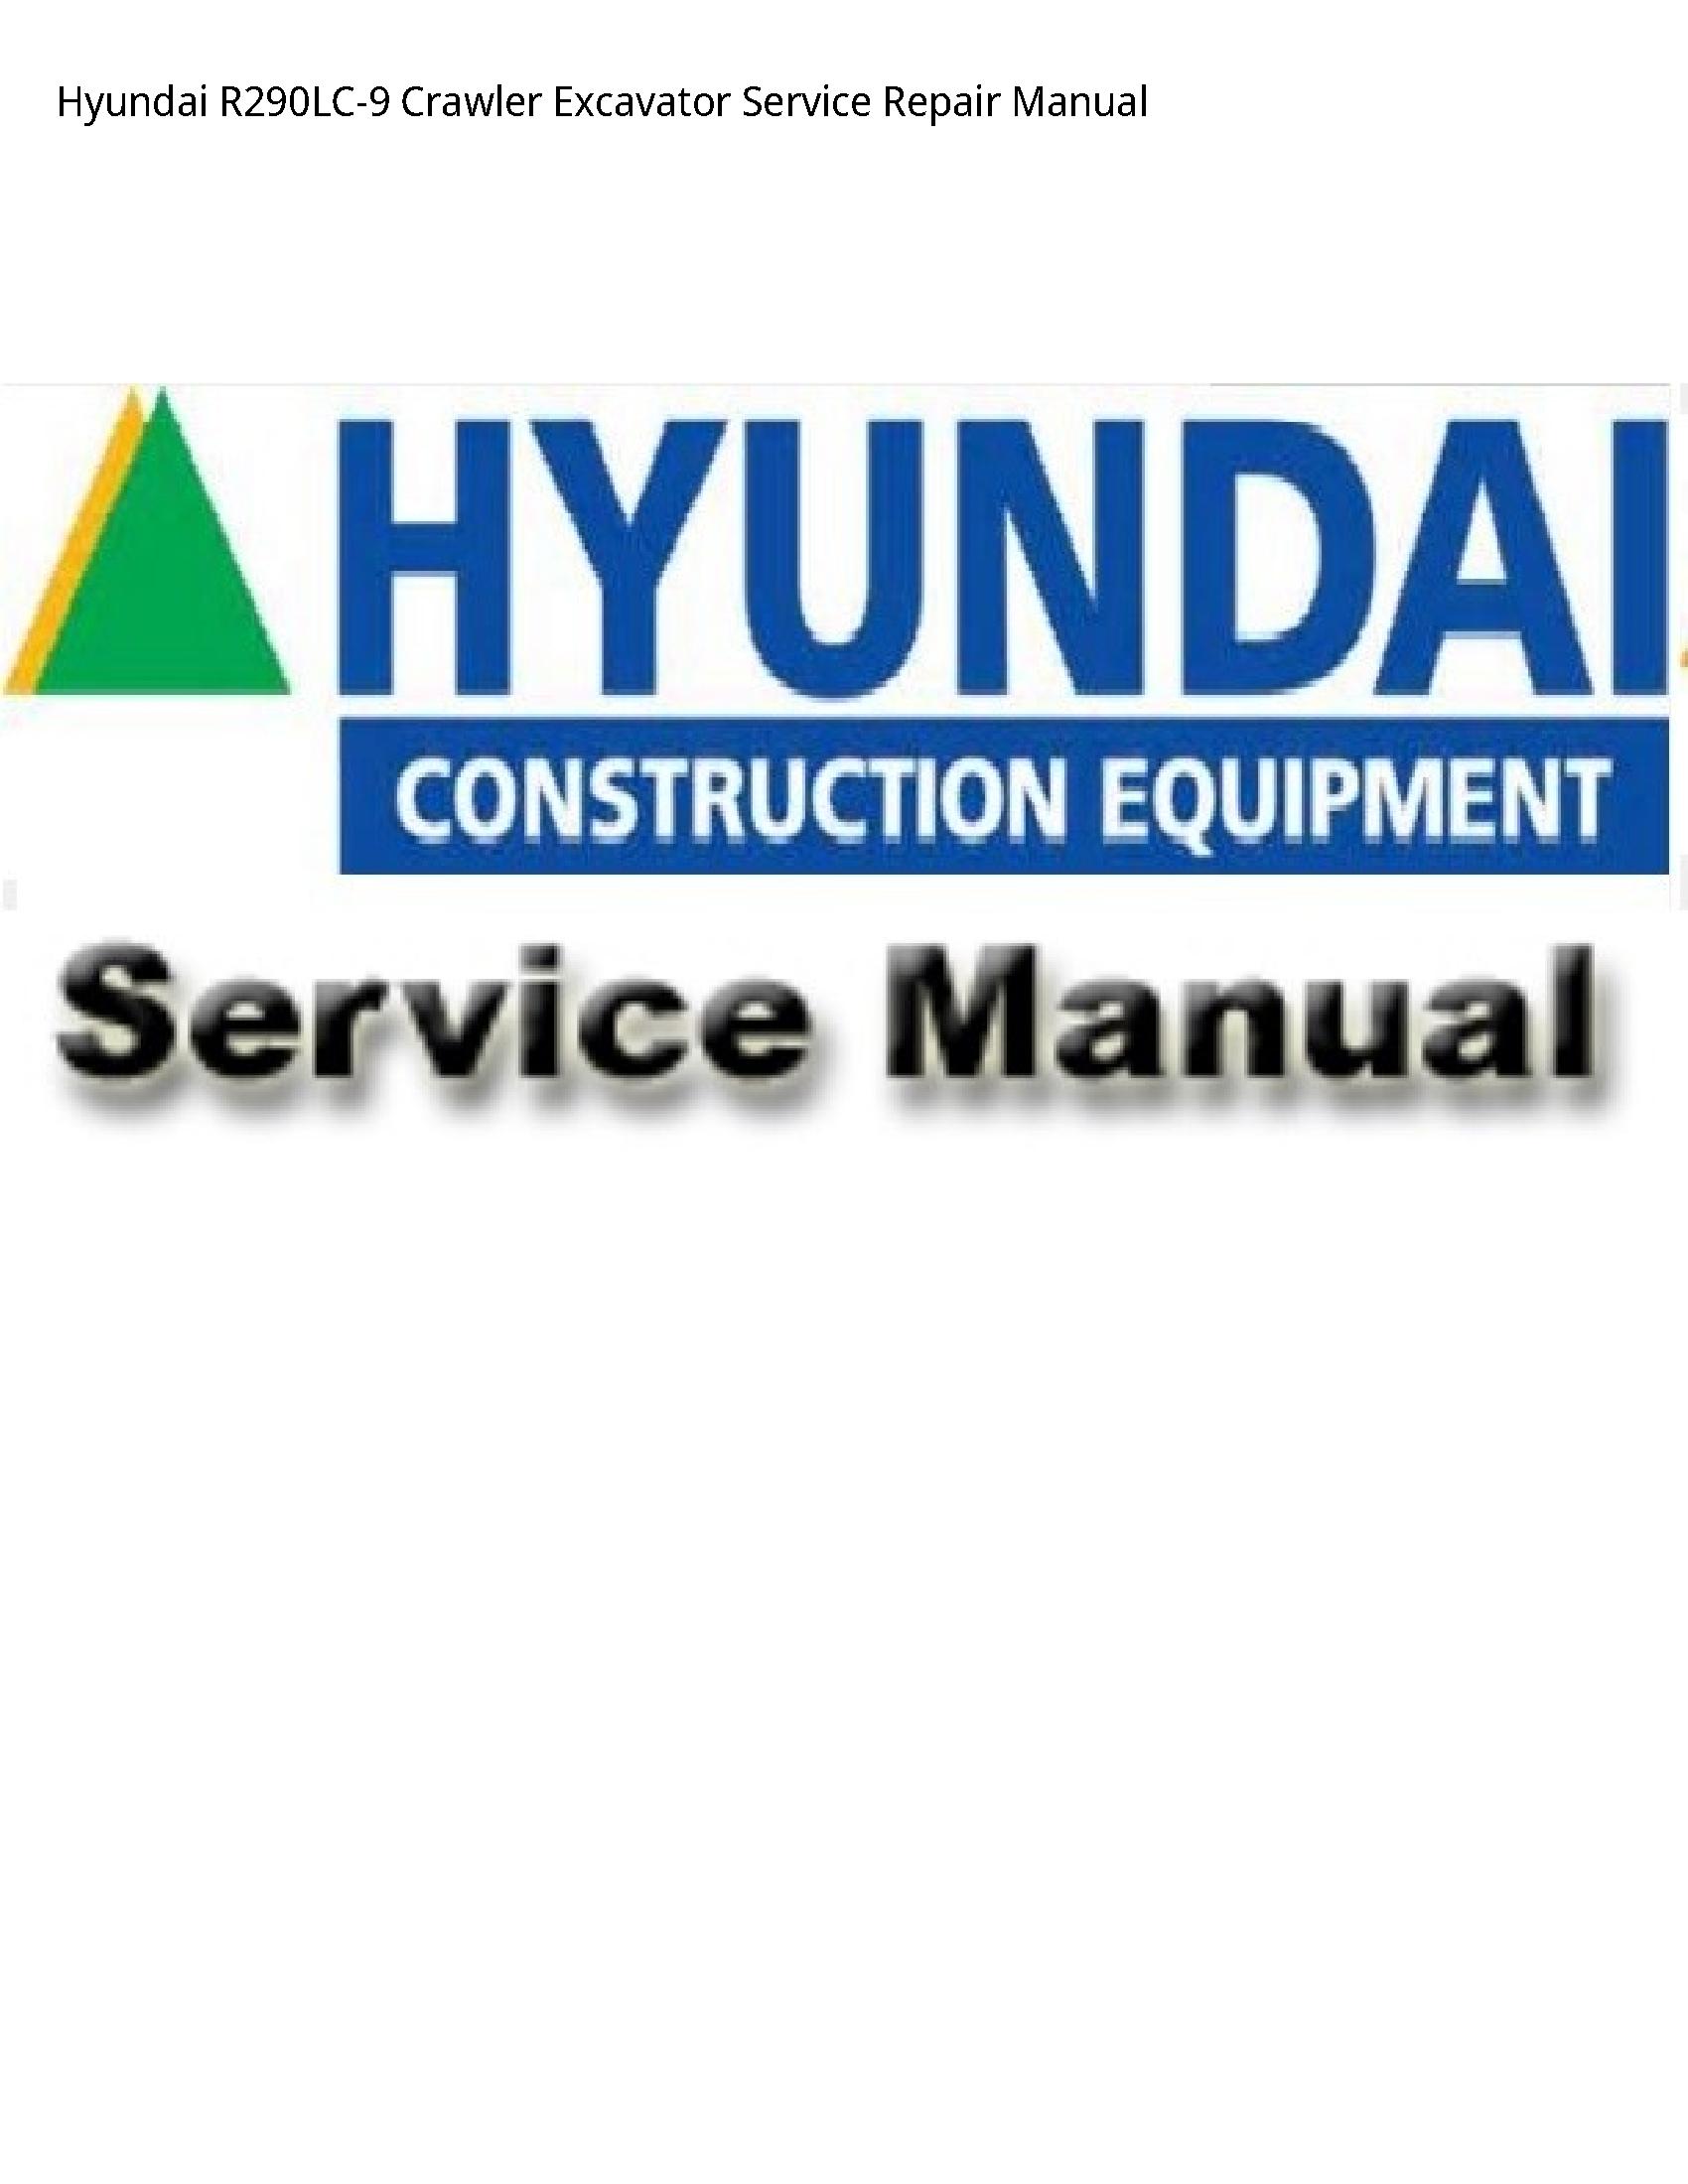 Hyundai R290LC-9 Crawler Excavator manual